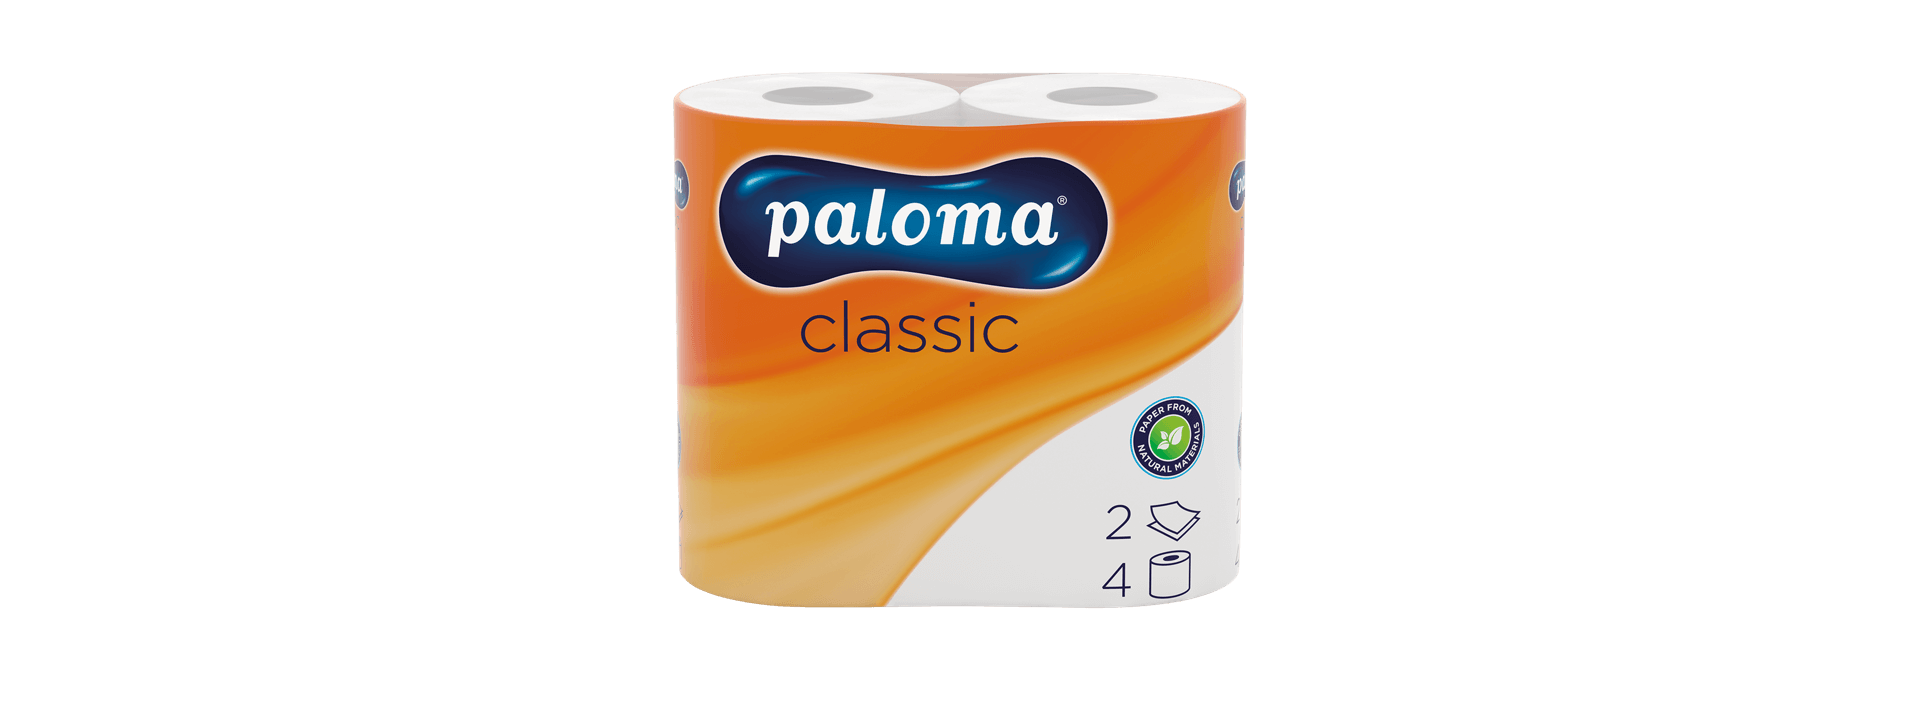 paloma-classic-2p-4